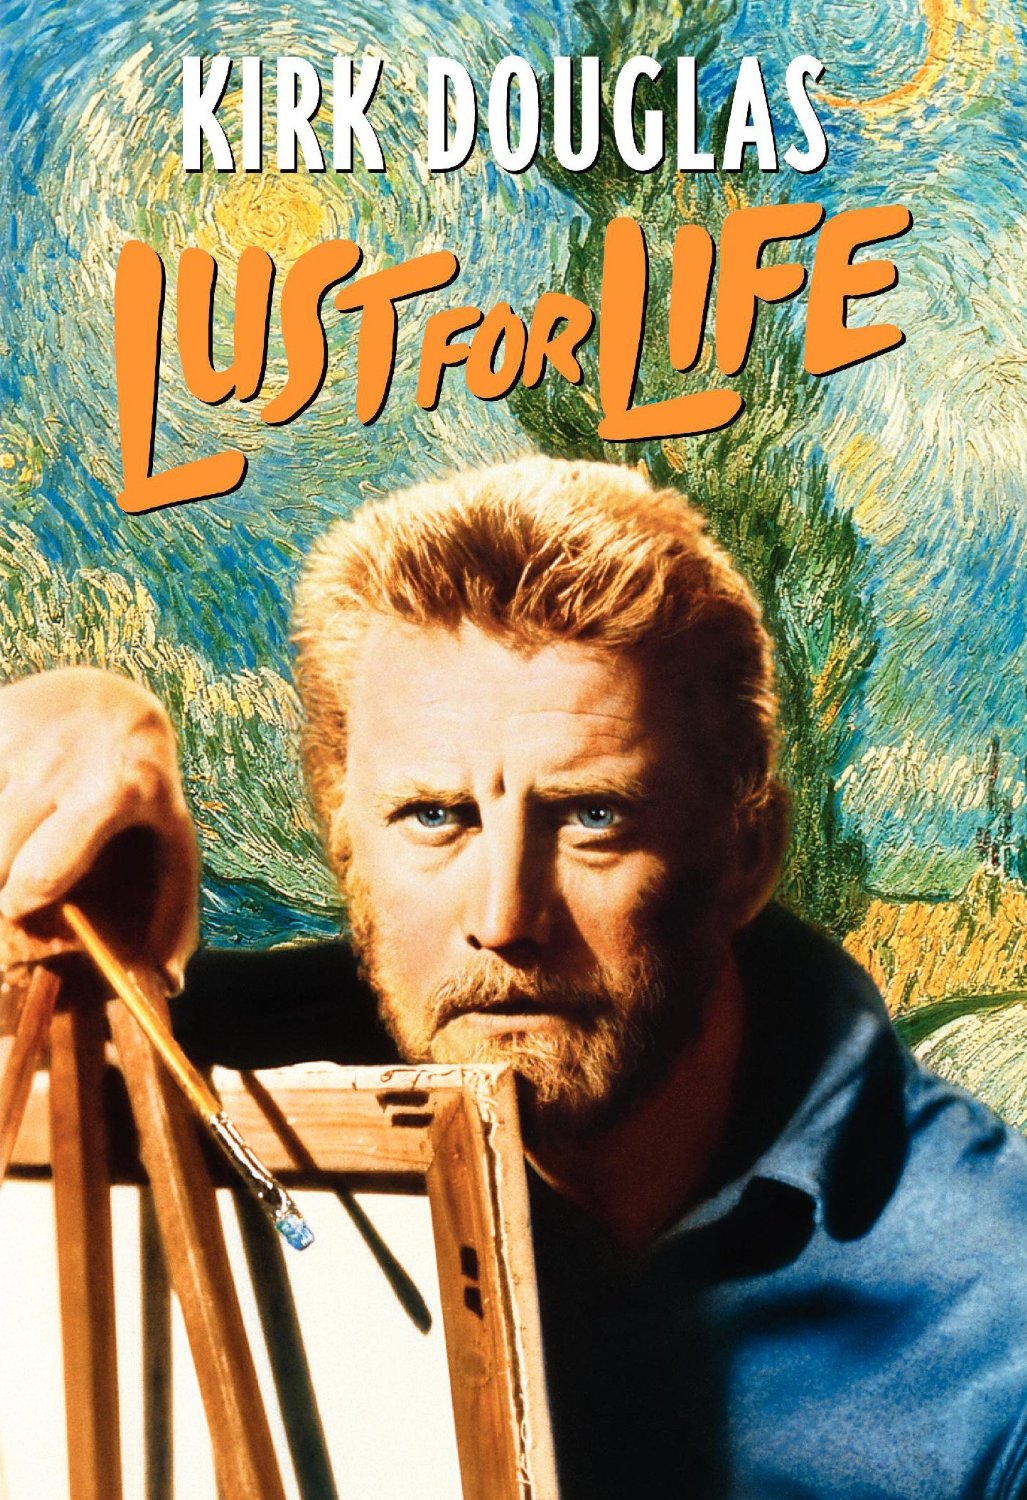 Kirk Douglas as Vincent van Gogh in Lust for Life